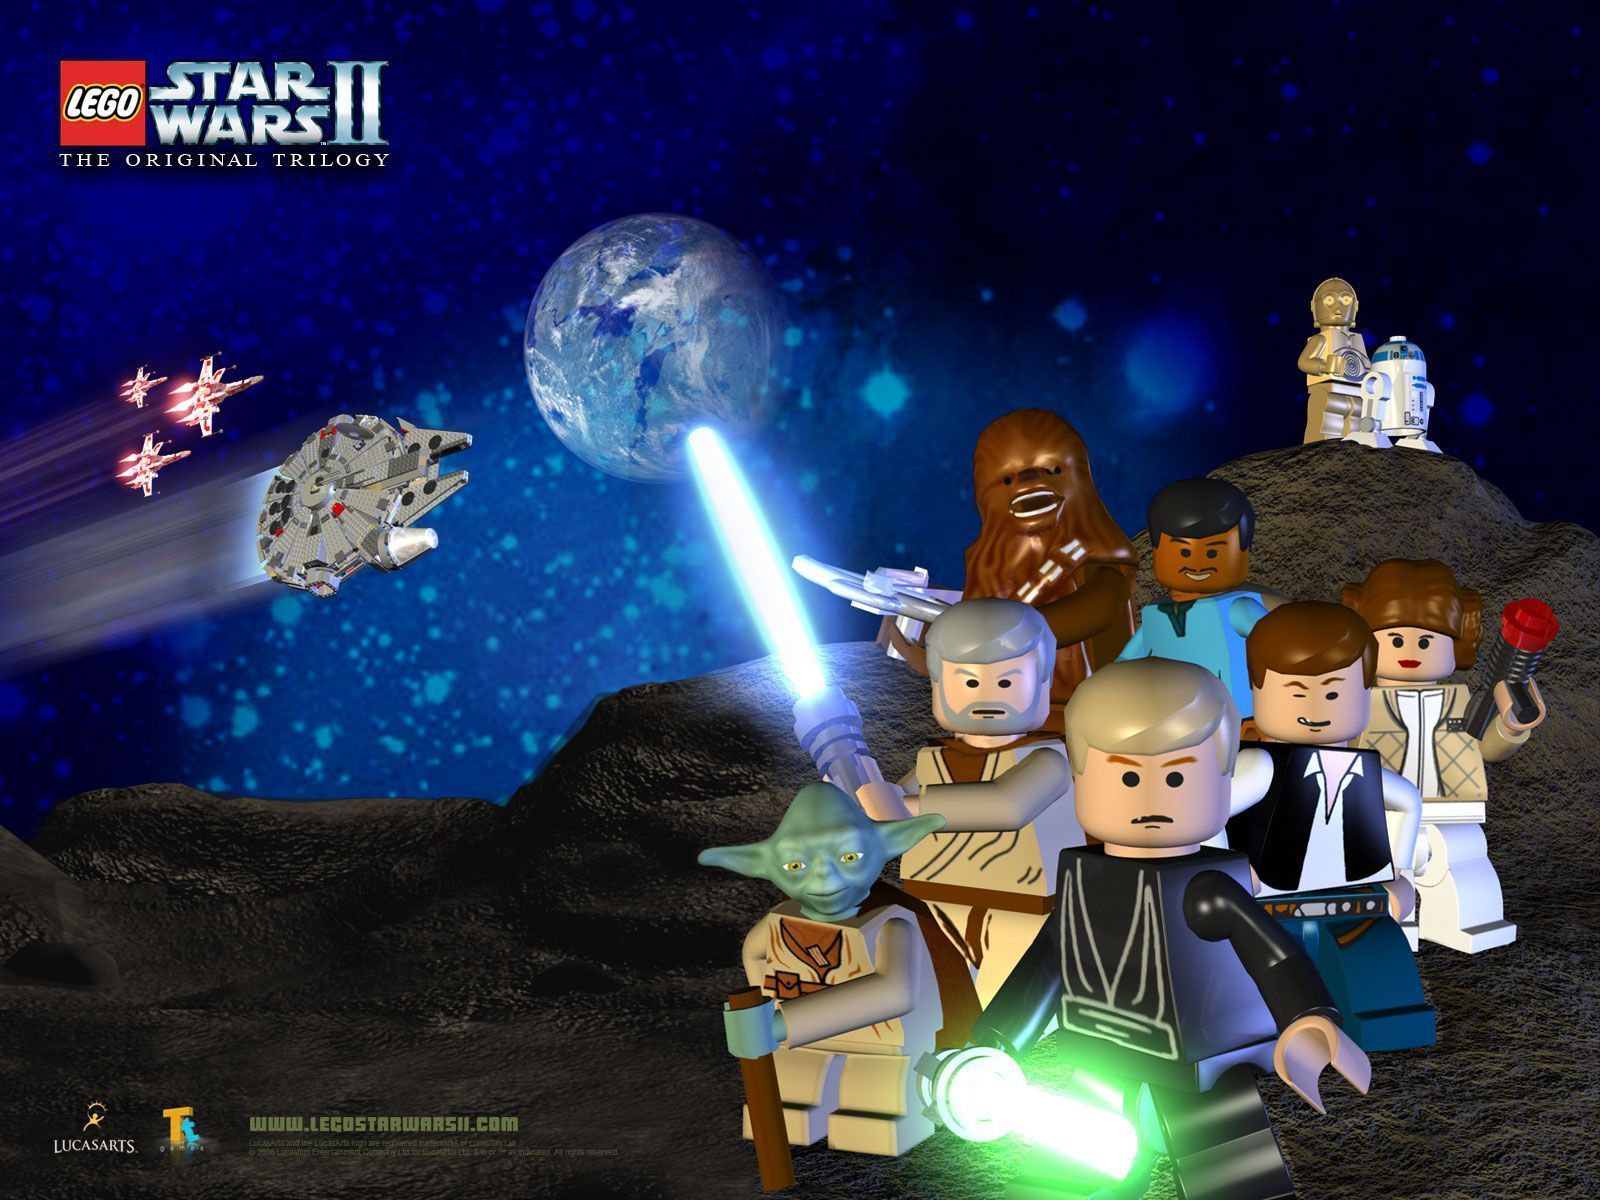 LEGO Star Wars II: The Original Trilogy #18